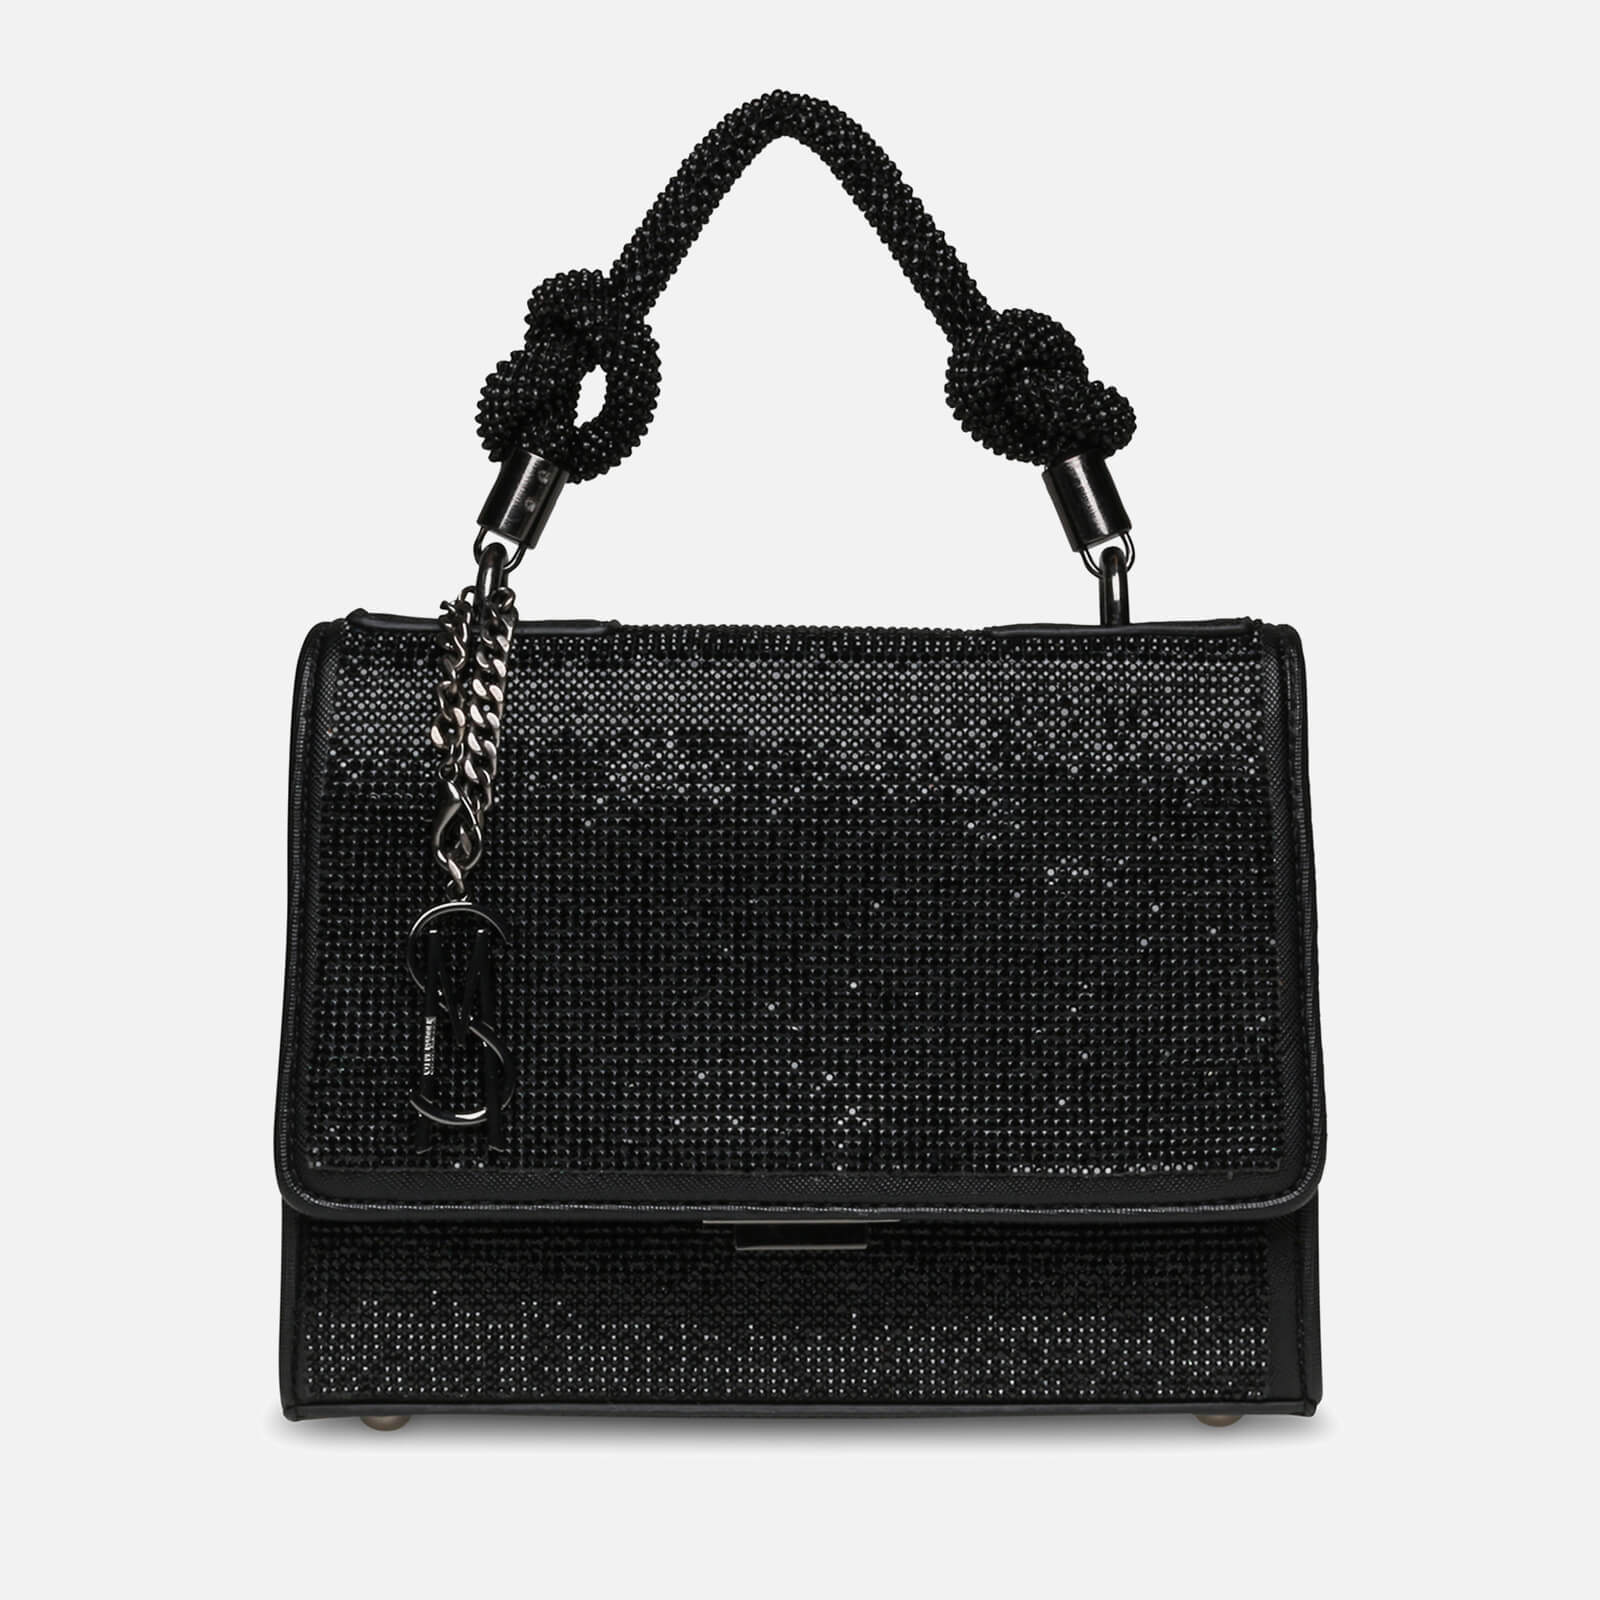 Steve Madden Women's Bknotted Top Handle Mini Bag - Black